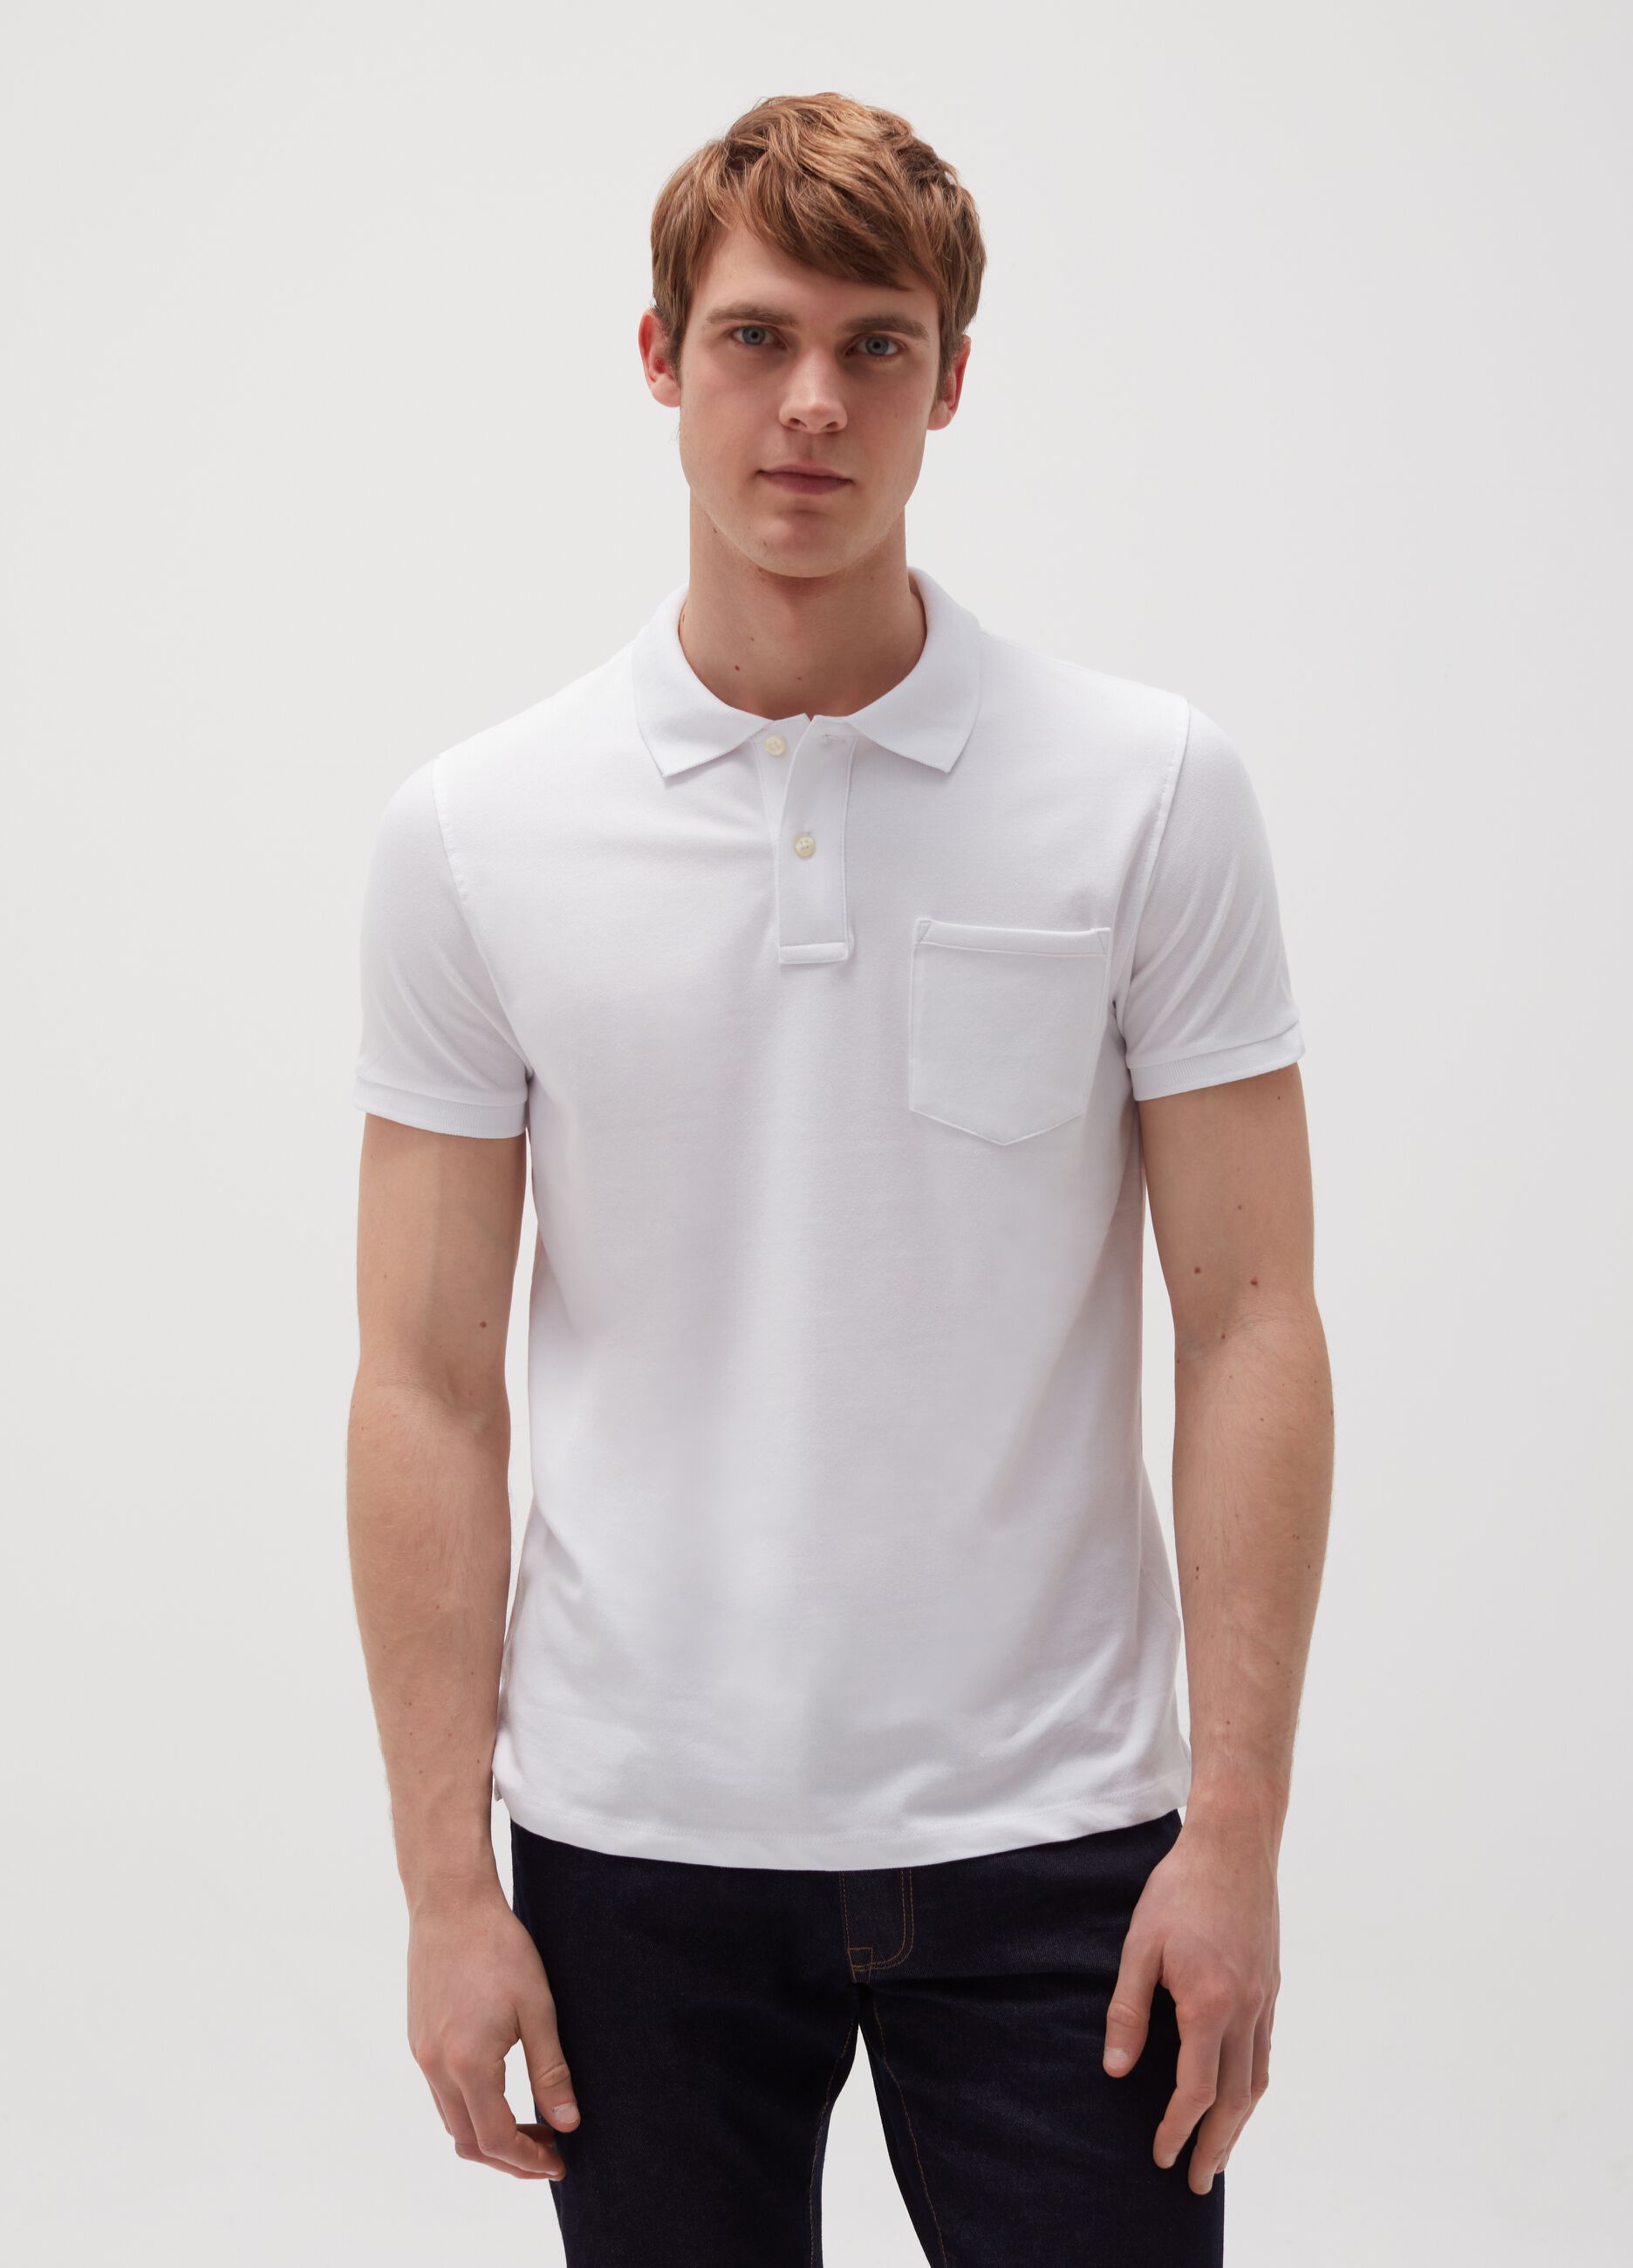 Cotton polo shirt with pocket